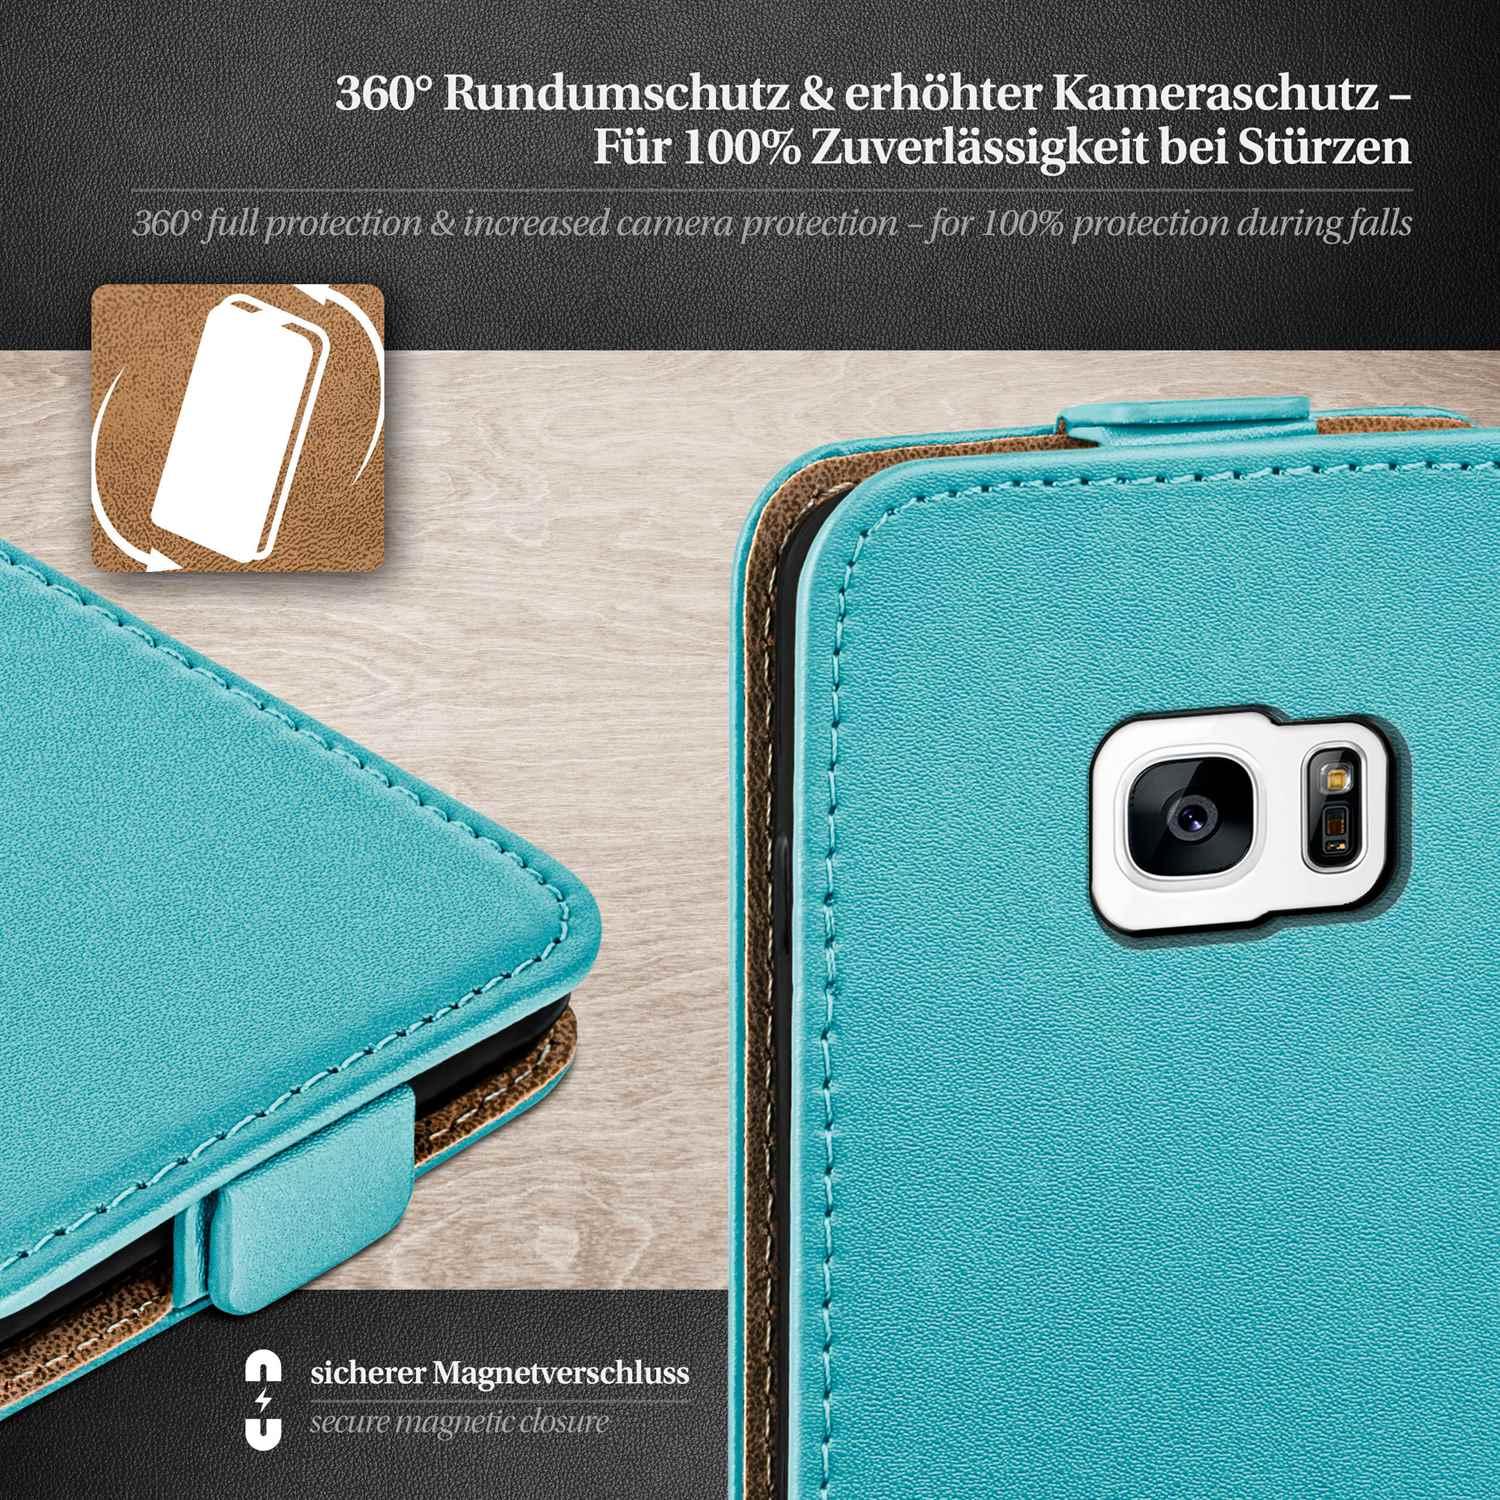 Flip MOEX Cover, Galaxy Aqua-Cyan Case, S7, Flip Samsung,